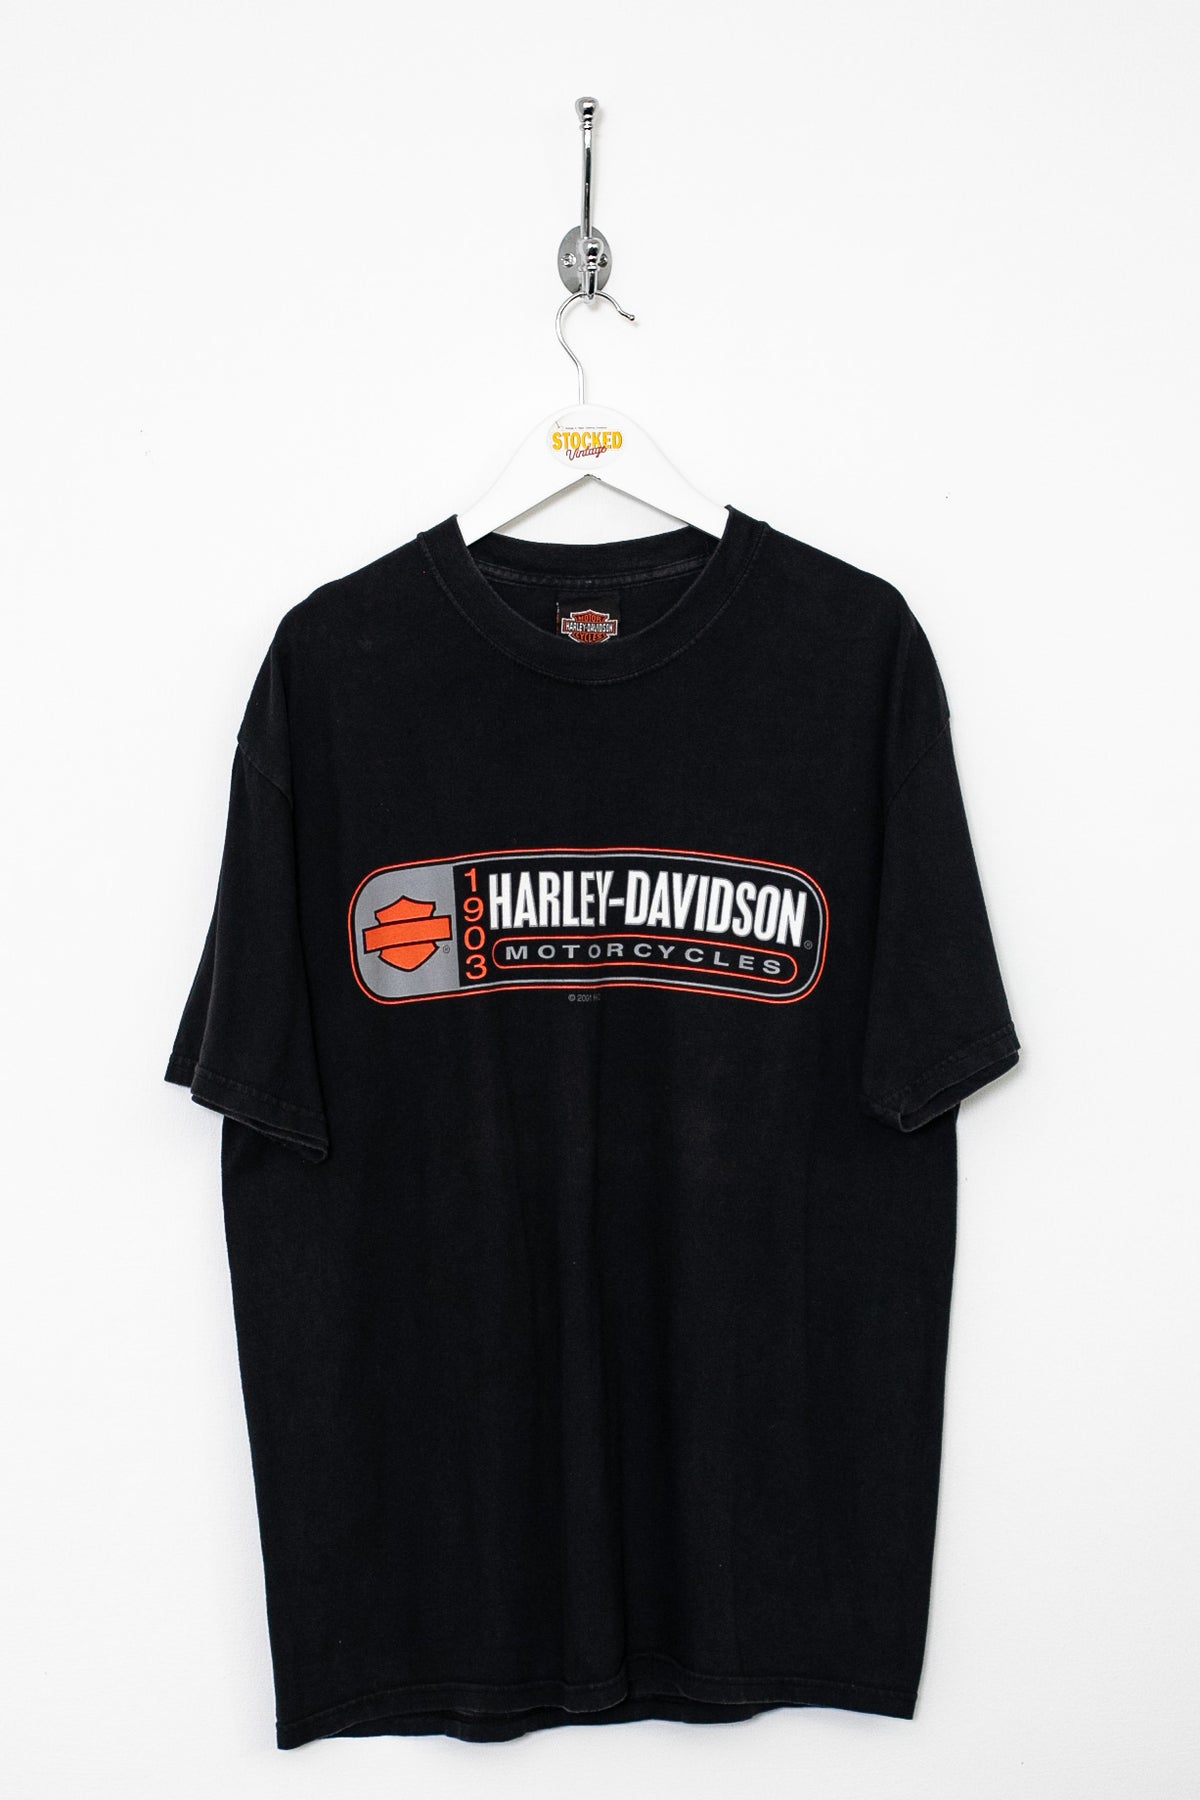 00s Harley Davidson Tee (M)